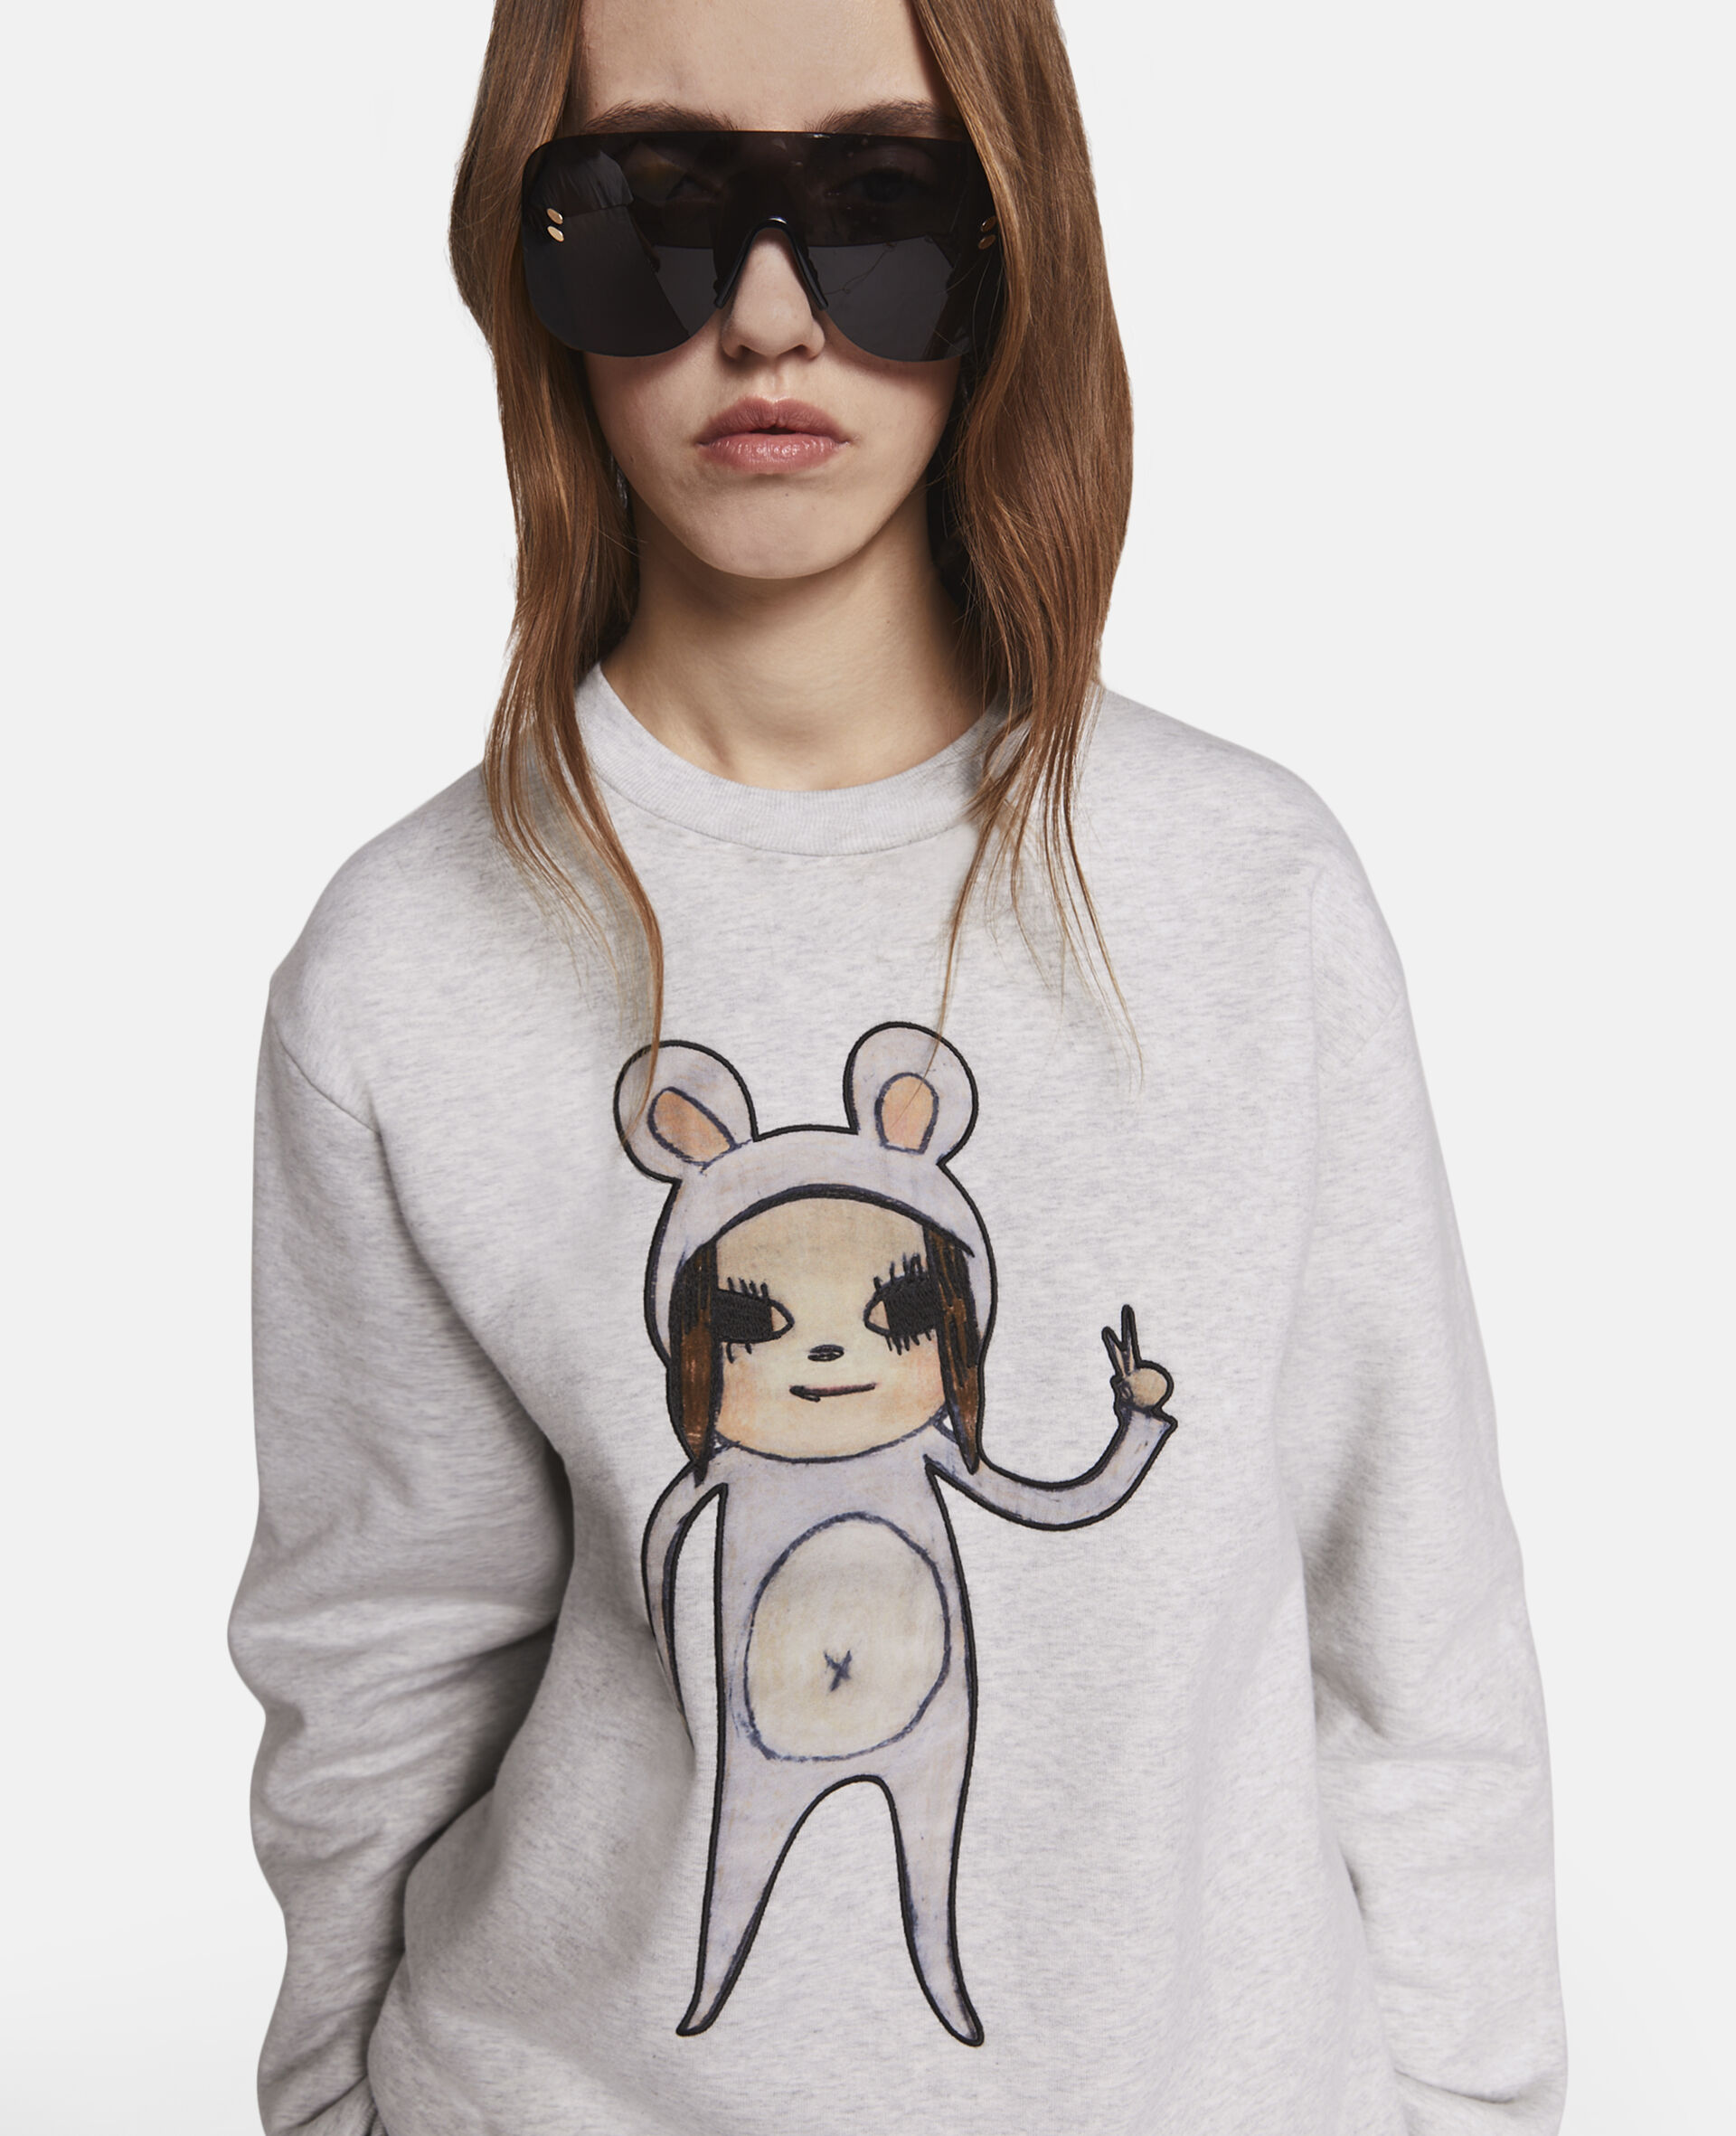 Untitled Bunny Girl Embroidered Sweatshirt-Grey-large image number 4